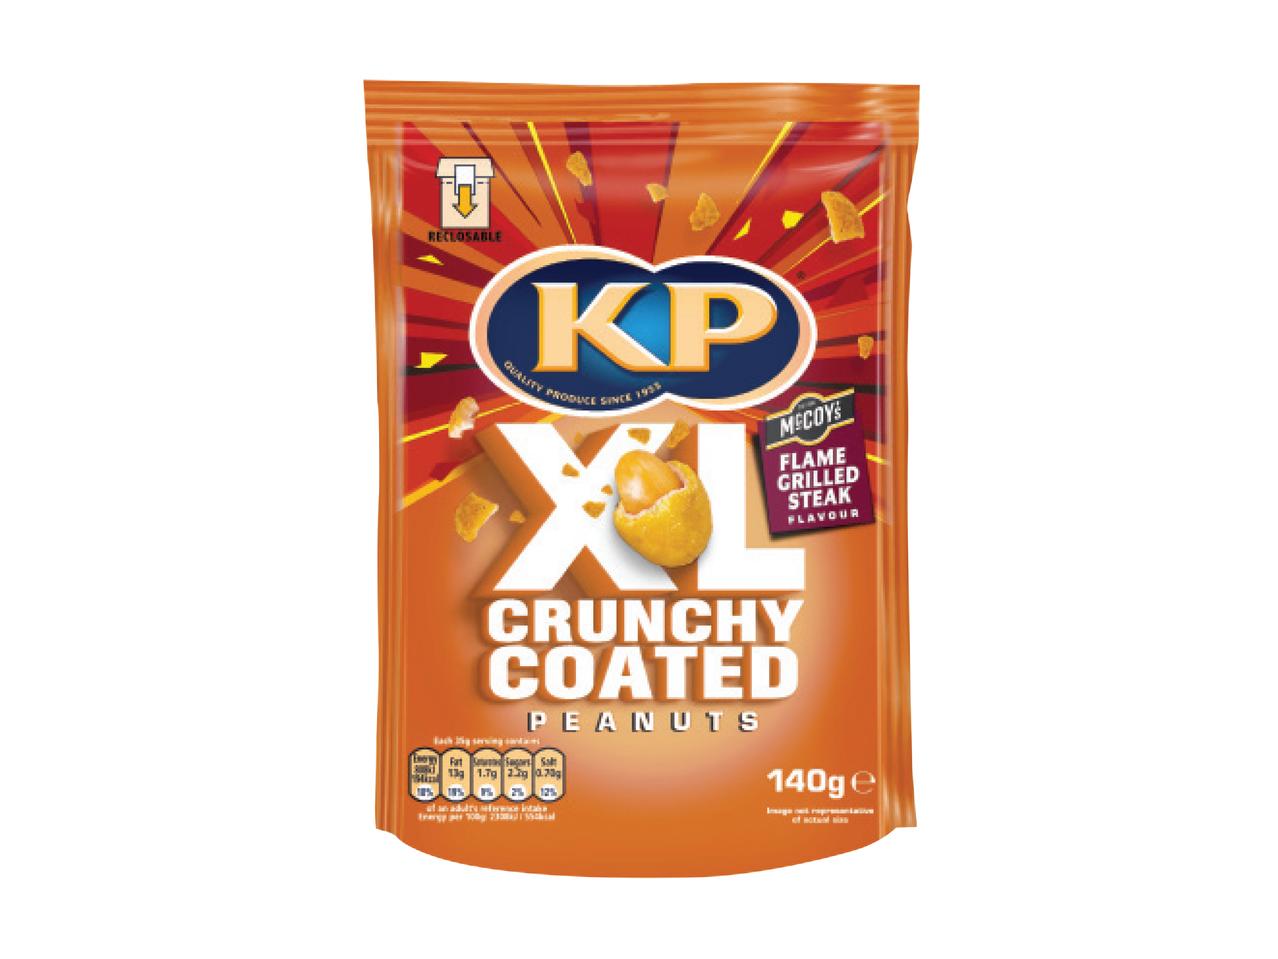 KP XL Crunchy Coated Peanuts - Flame Grilled Steak